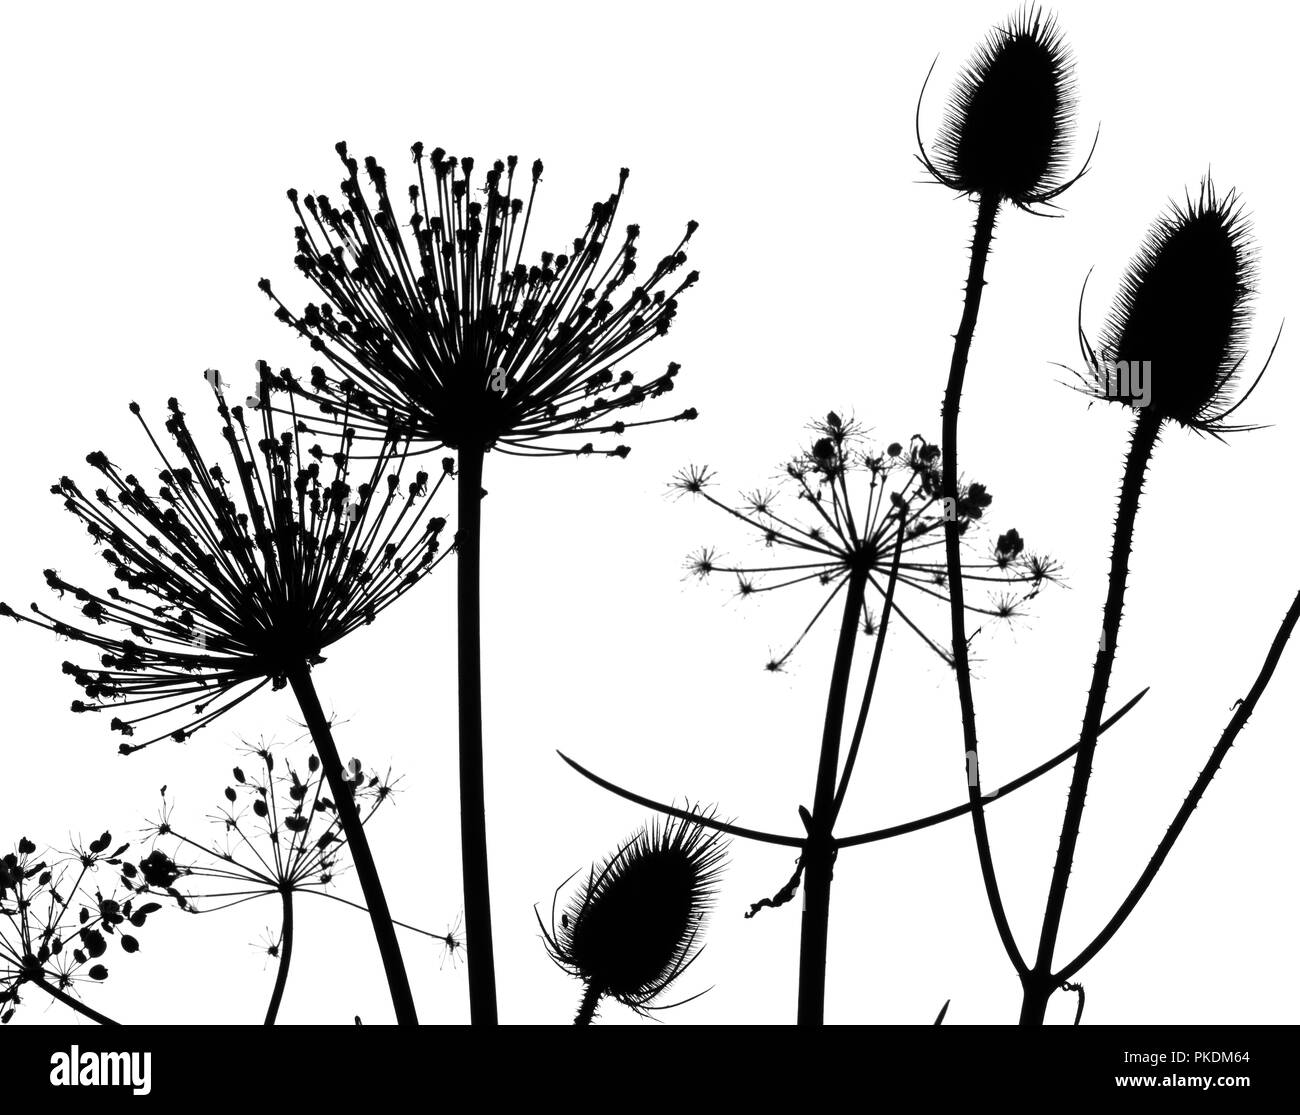 Teasel,hedge parsley and allium seedhead silhouettes Stock Photo